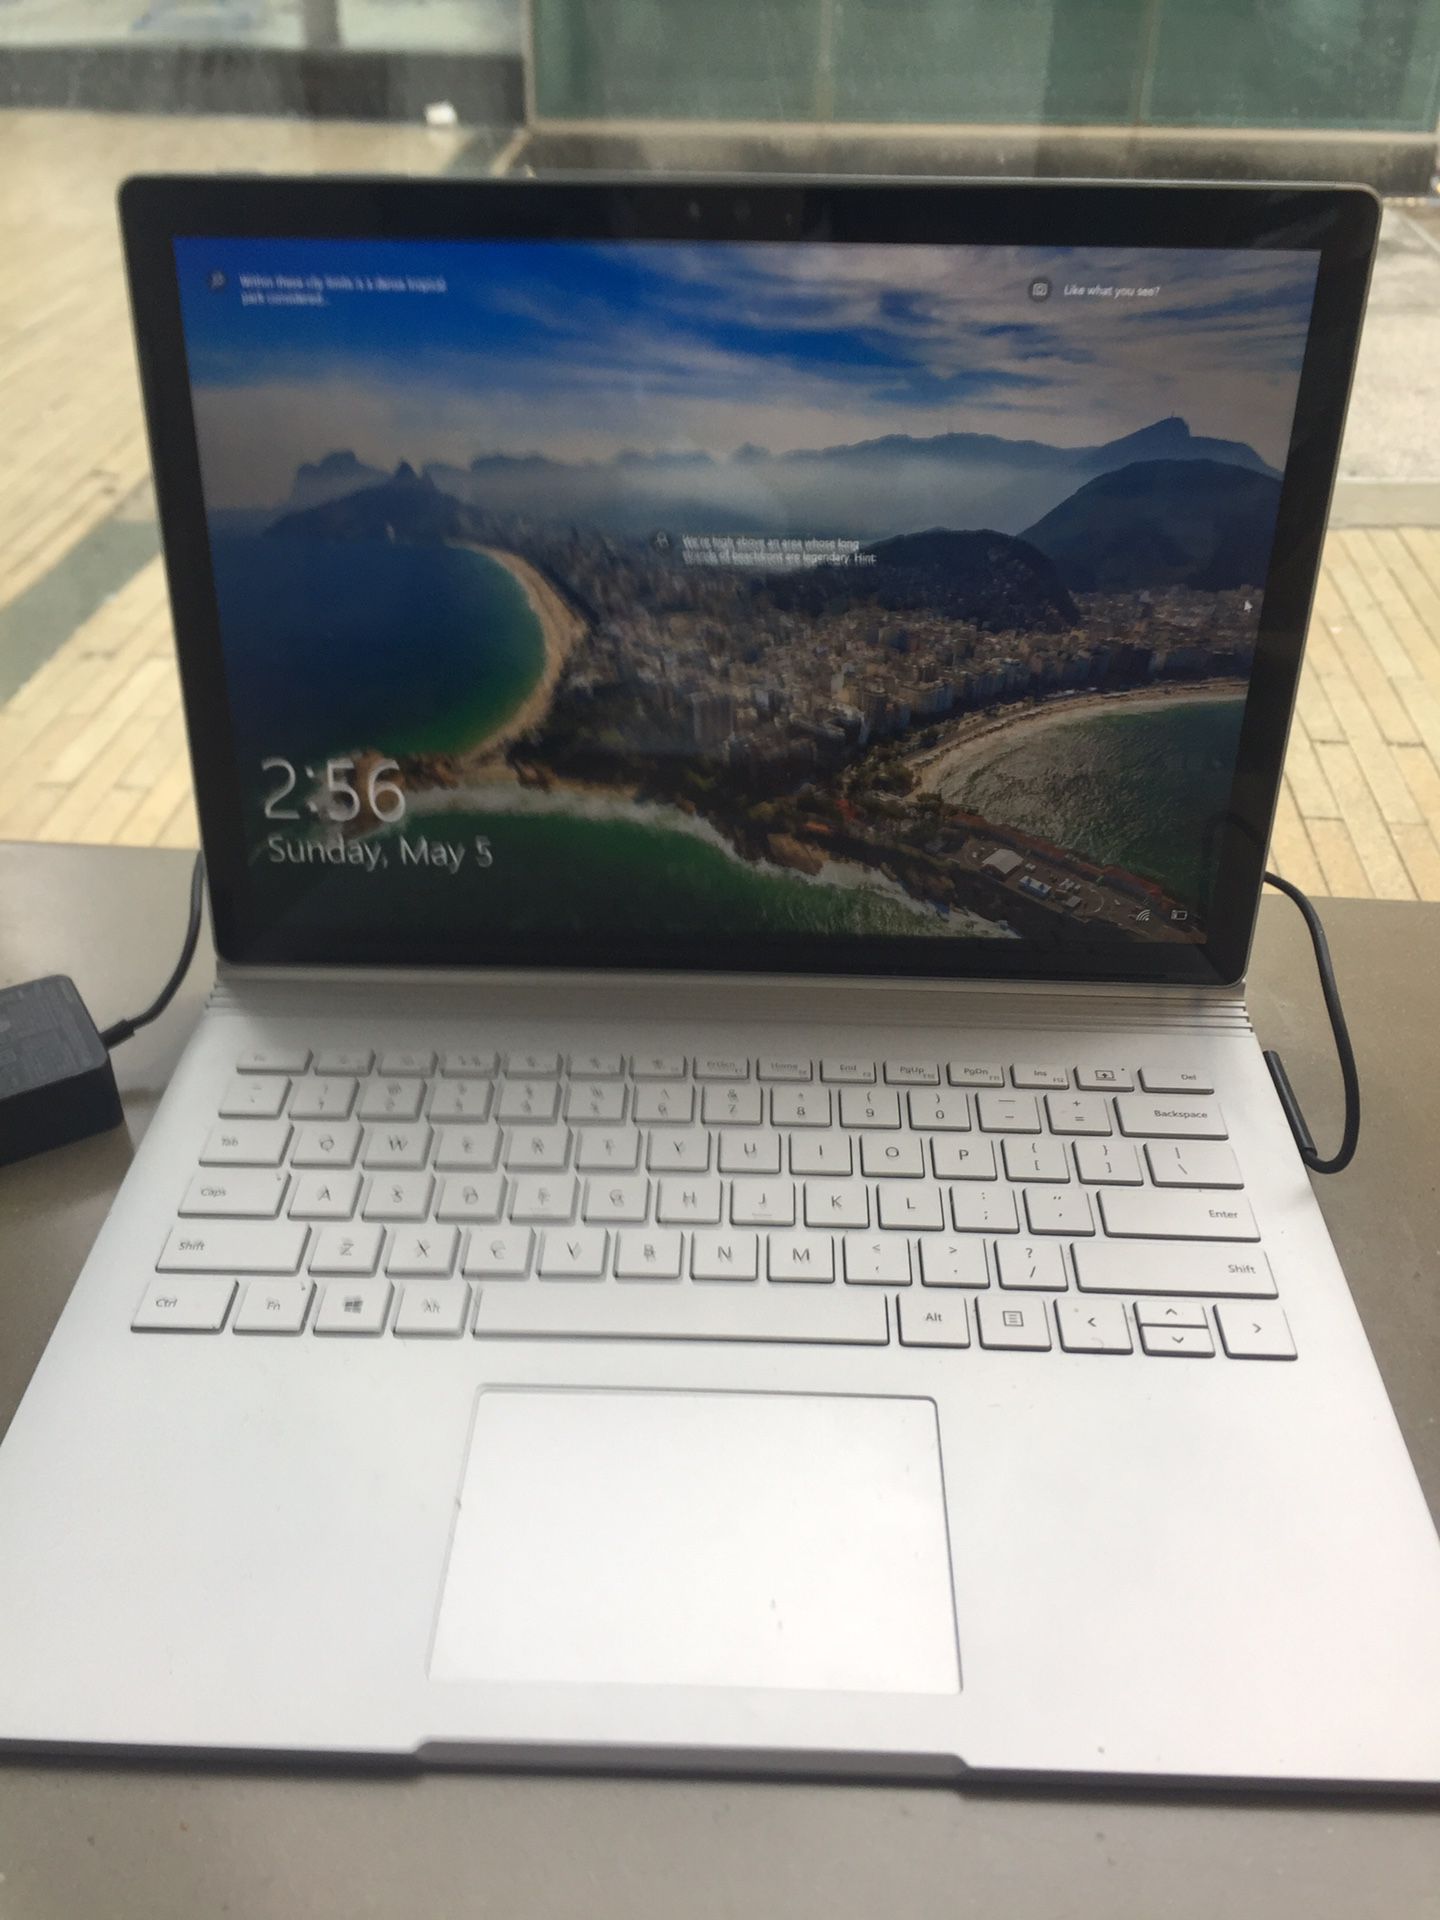 Microsoft Surface Book 13.5 inch, 1st gen